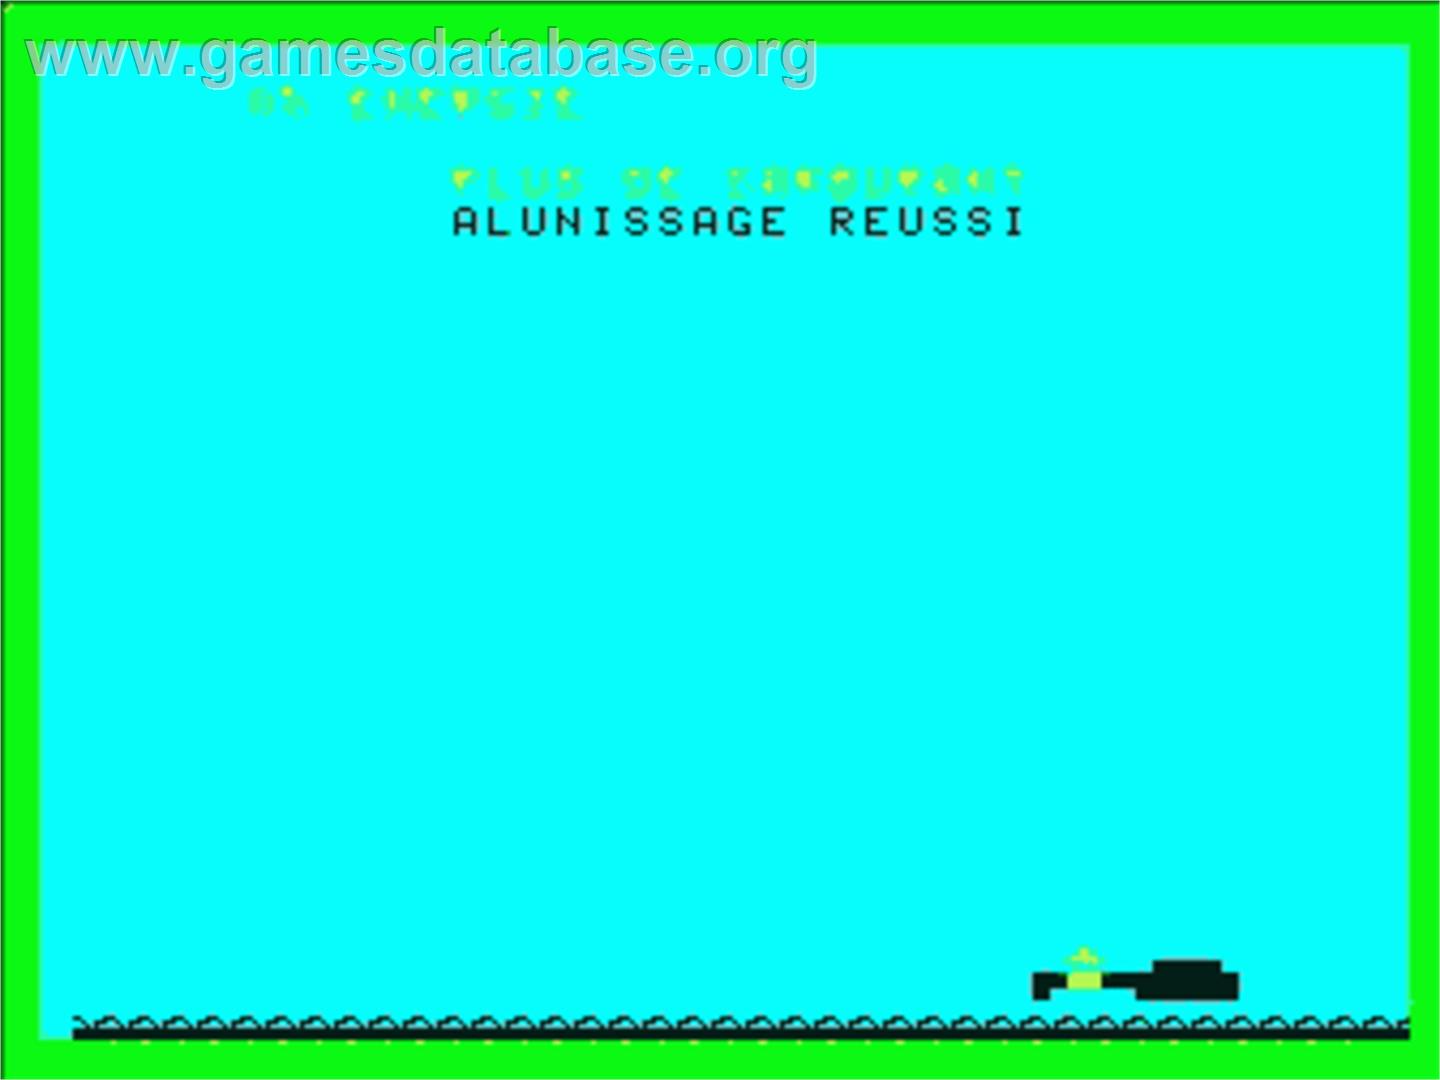 Alunissage - Philips VG 5000 - Artwork - In Game